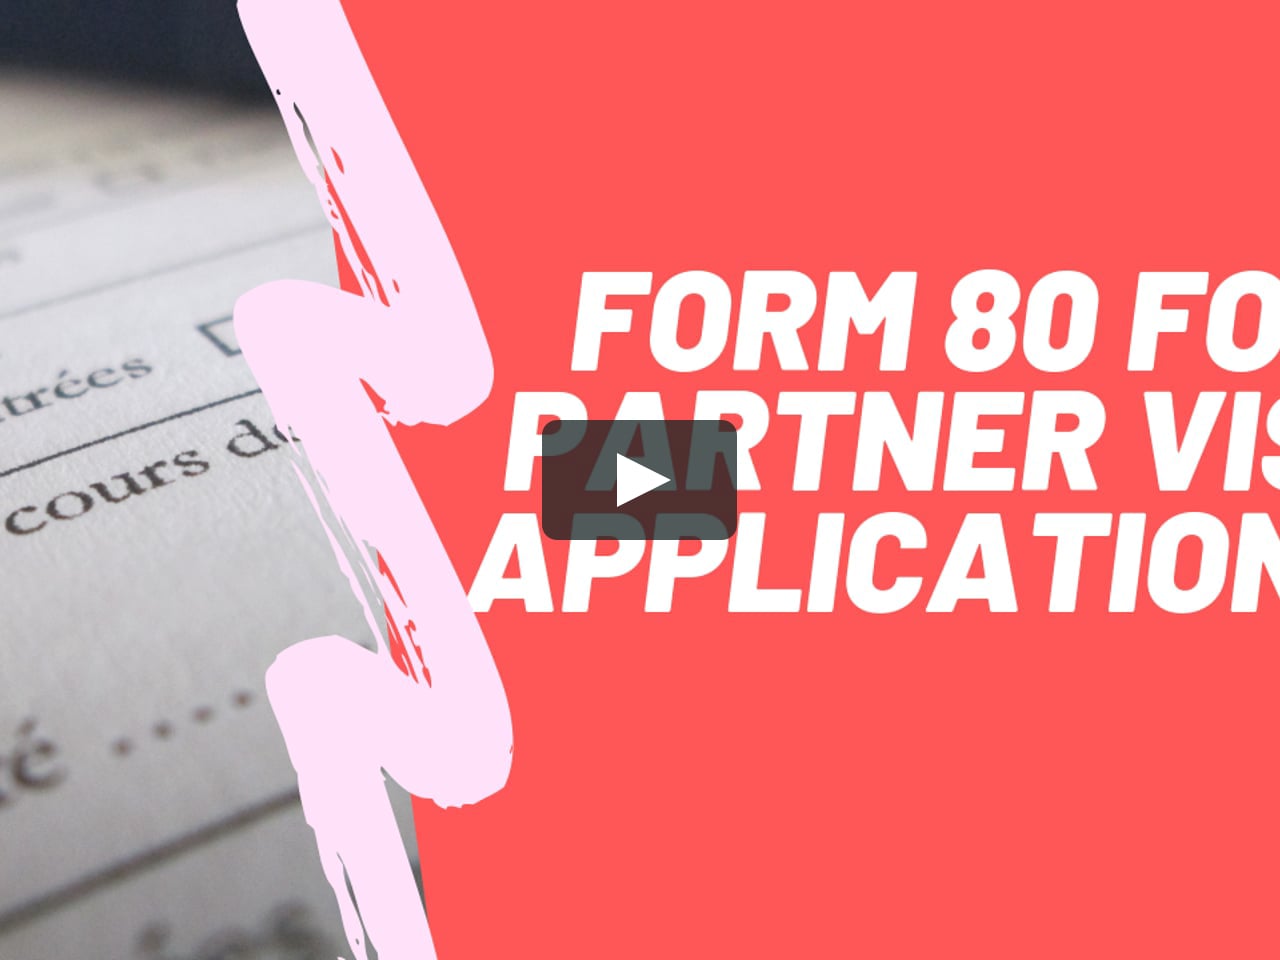 Form 80 For Partner Visa Applications on Vimeo